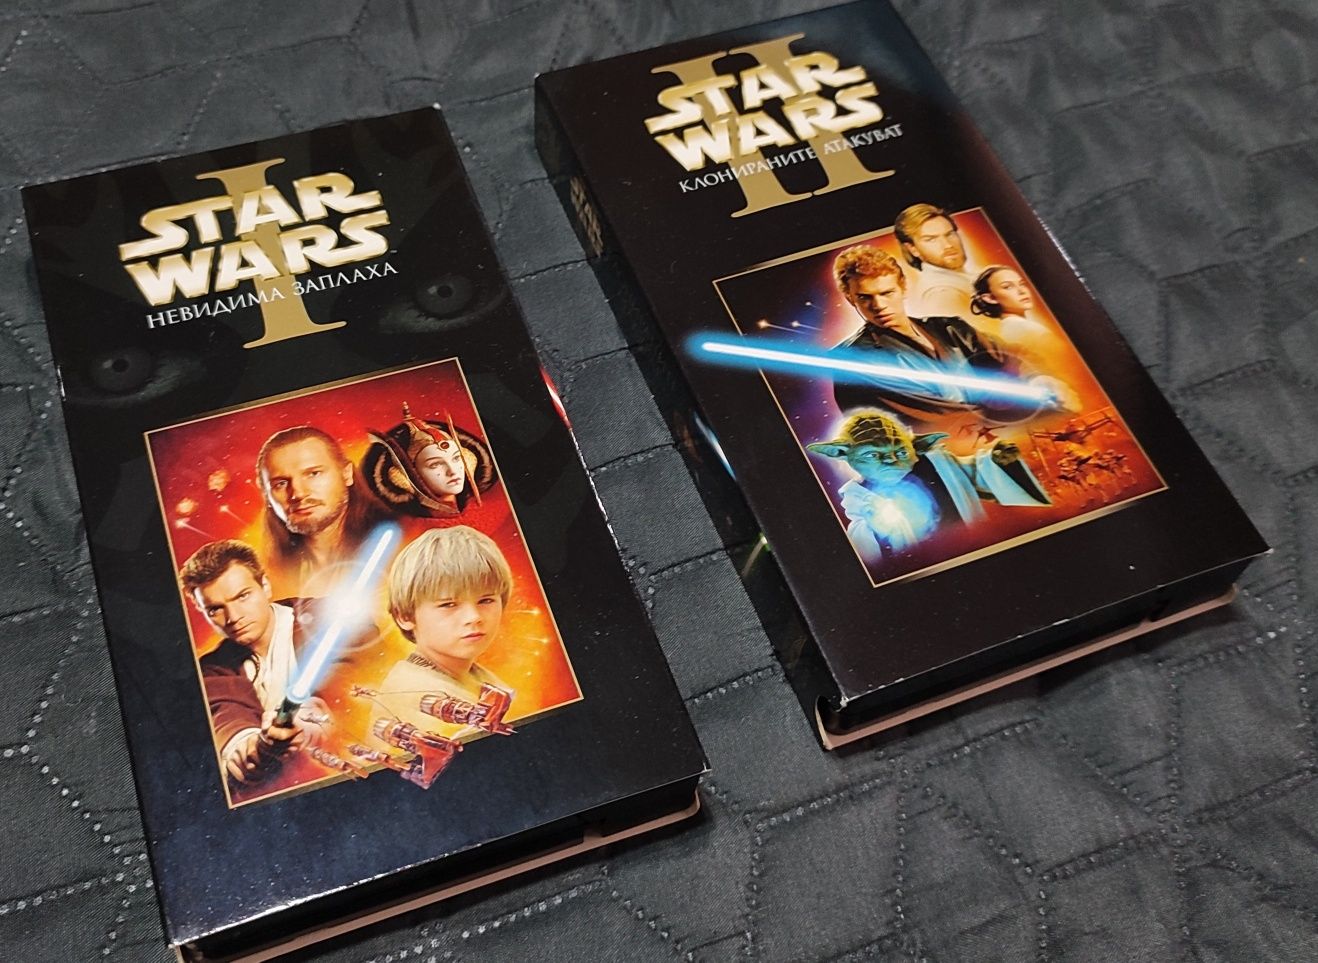 Star wars 1 и 2 видеокасети